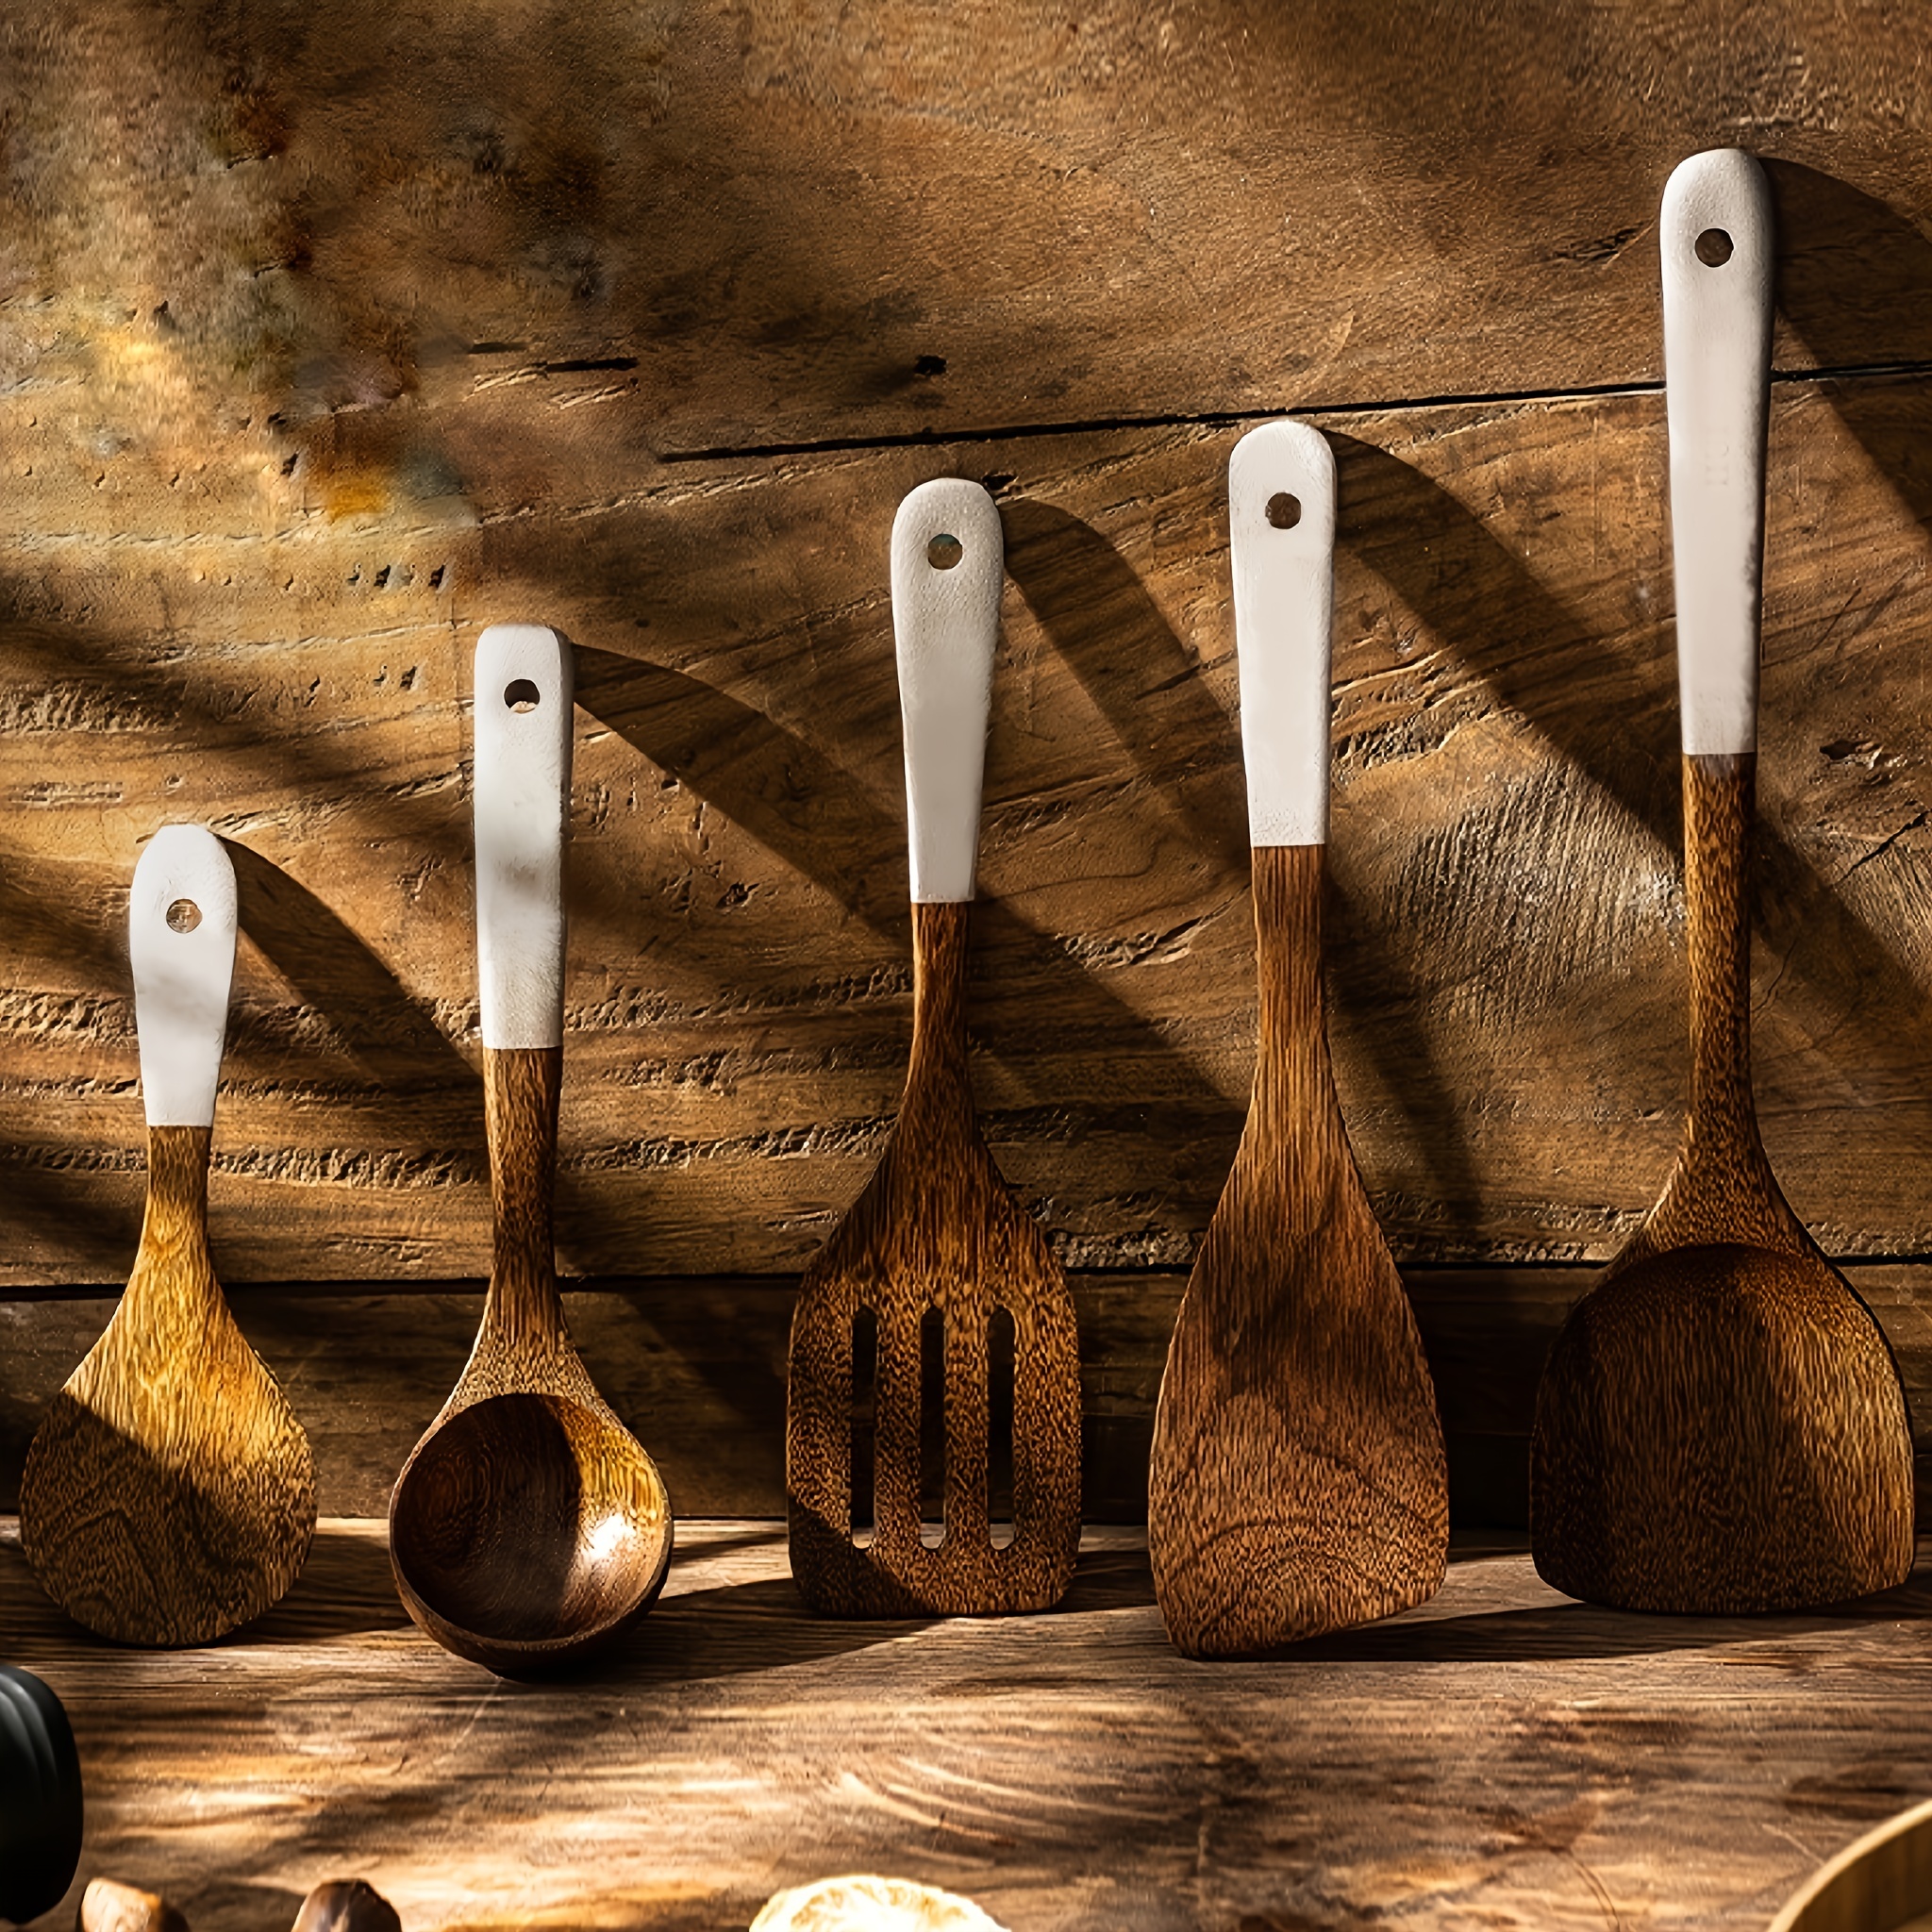 Espátula de madera para mezclar y cocinar, juego de espátulas de cocina de  madera, ideal para girar, mezclar, cuchara de esquina y raspador, alta